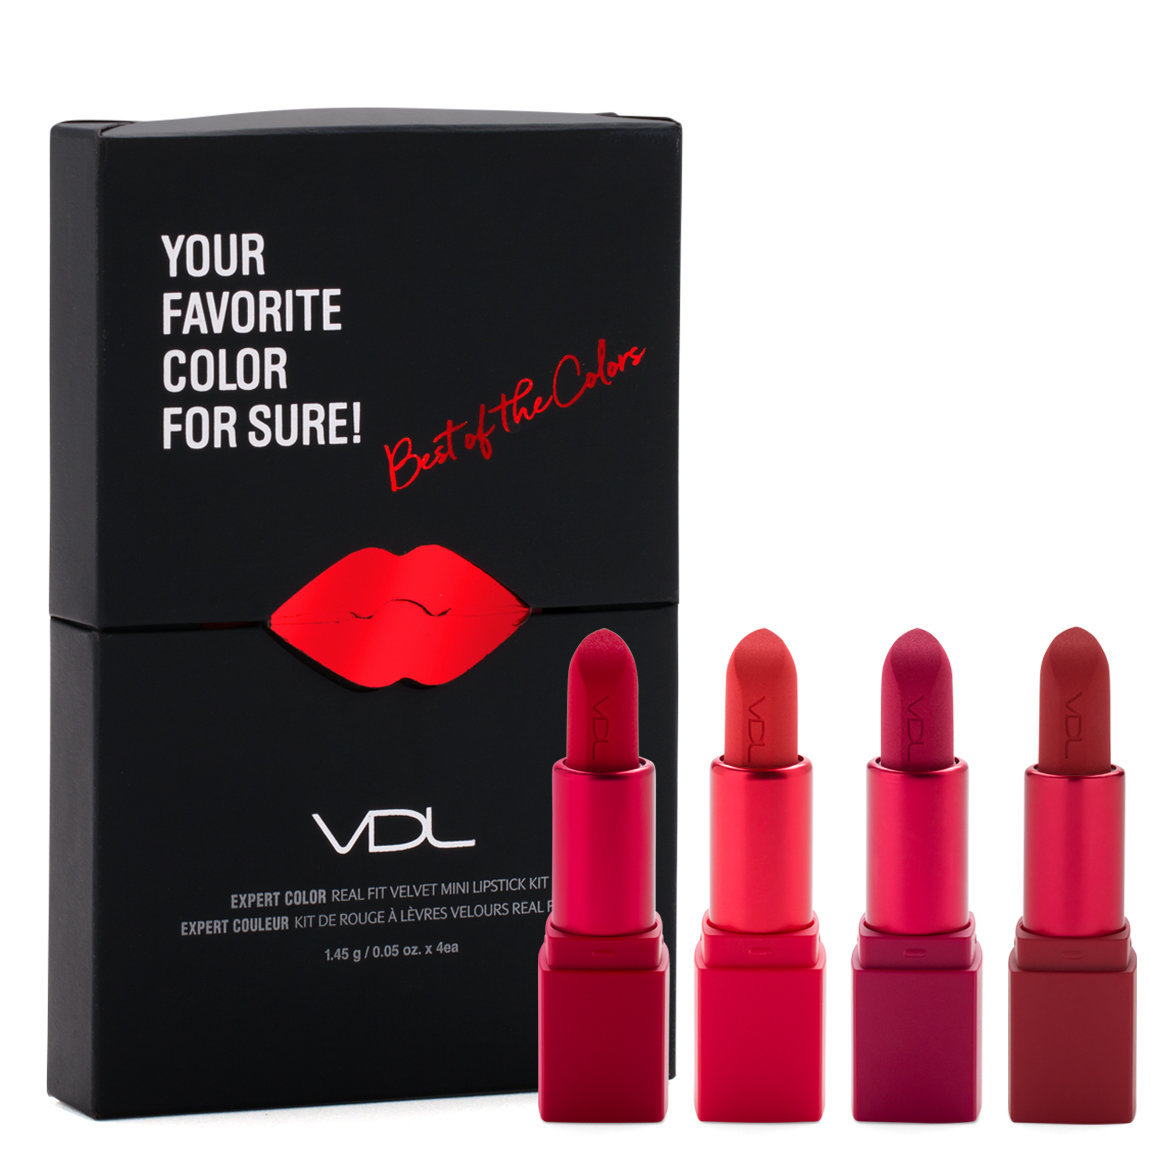 VDL Expert Color Real Fit Velvet Mini Lipstick Kit alternative view 1 - product swatch.